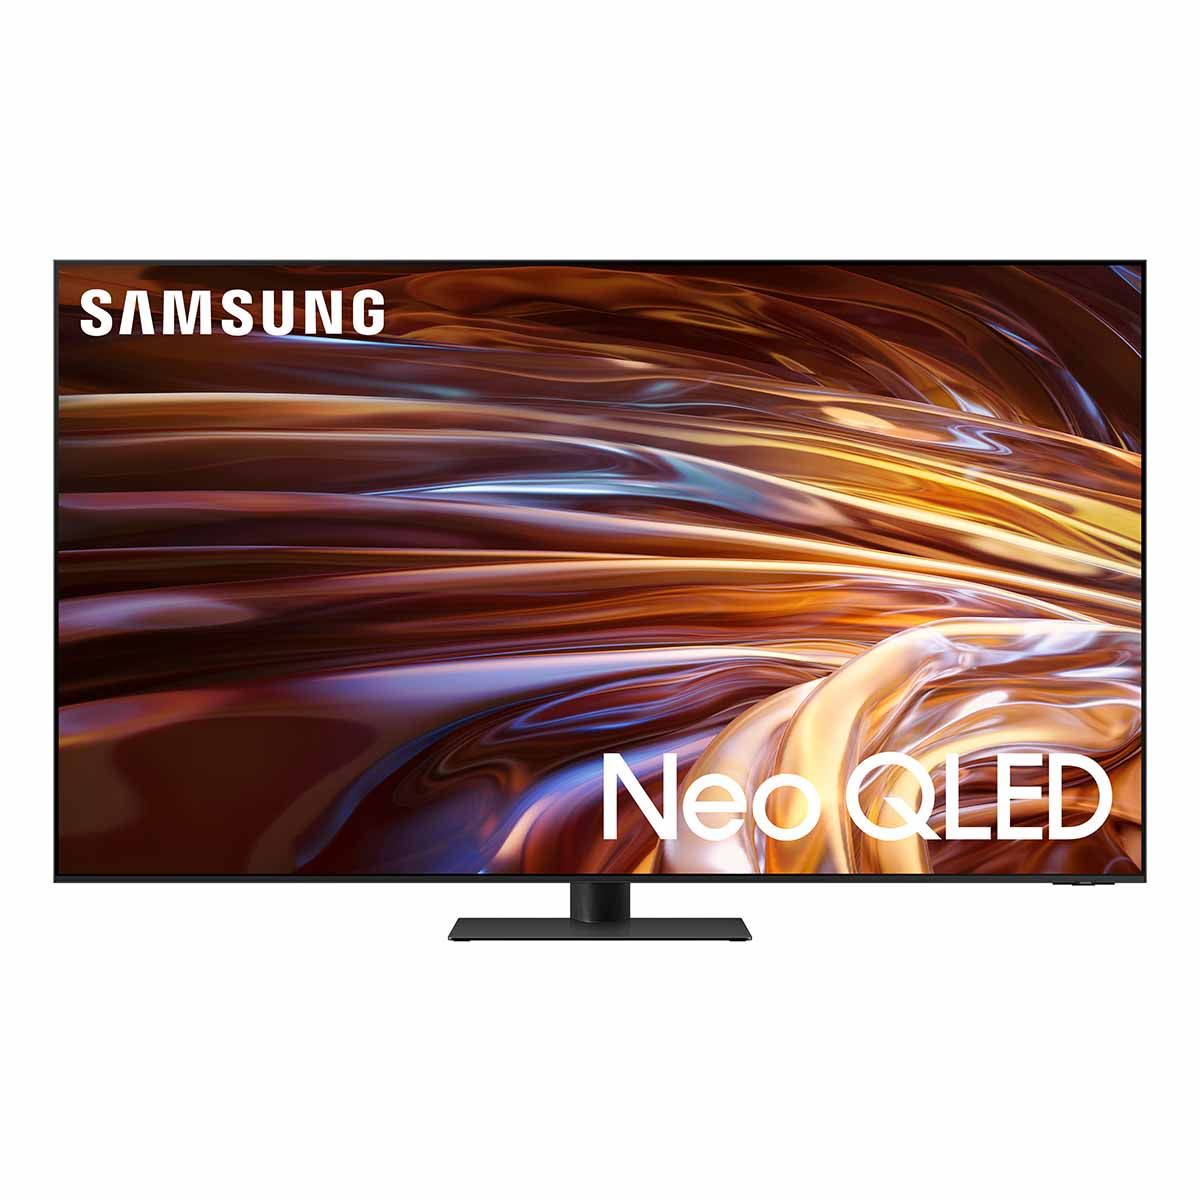 Samsung QN95D Neo QLED 4K Smart TV - 65" - front view